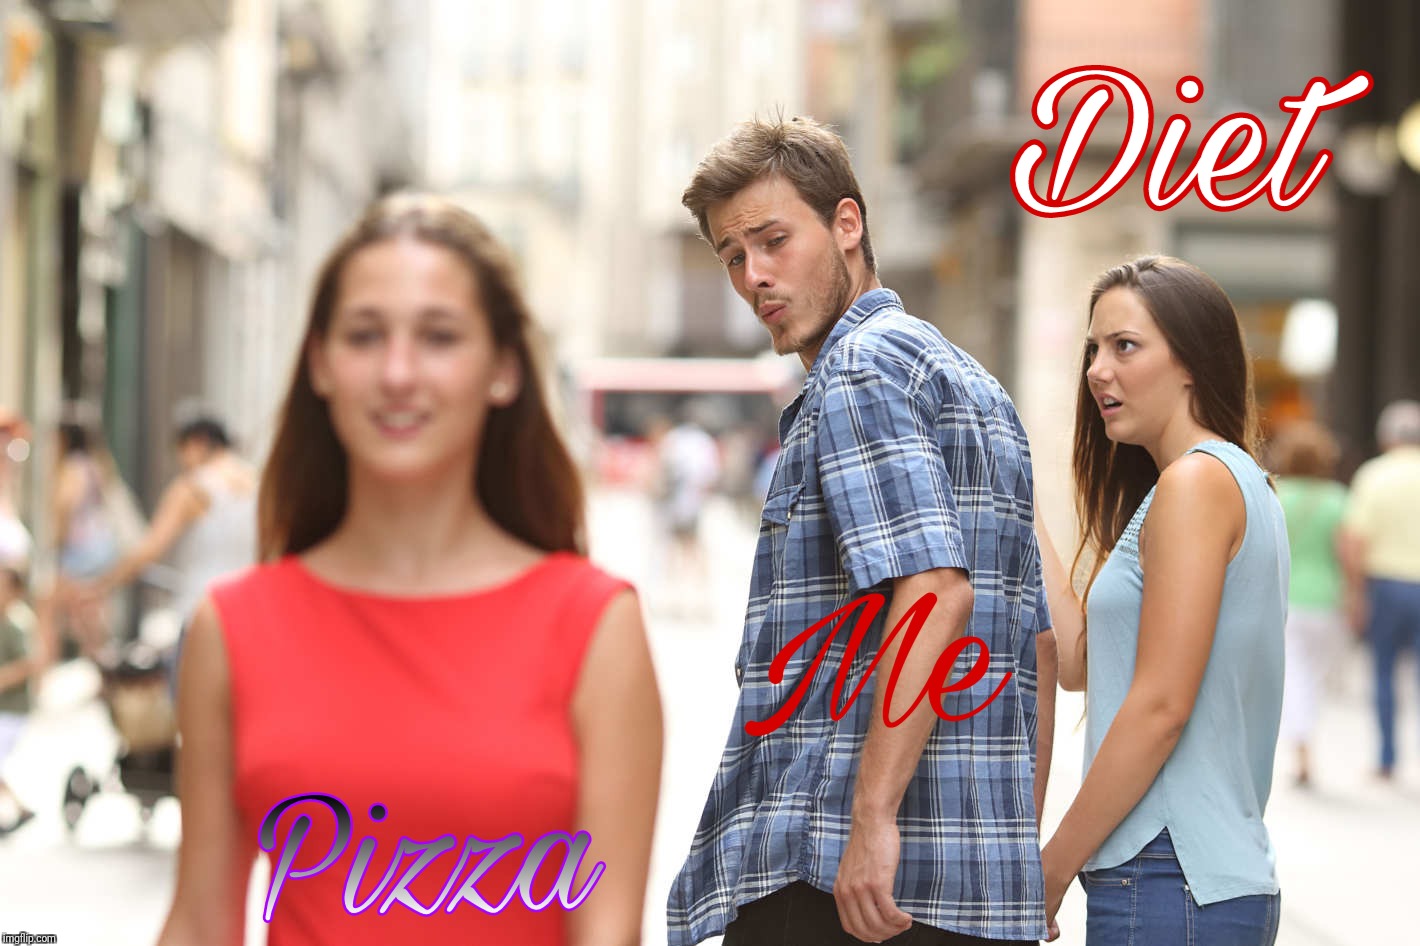 Diet vs Taste | image tagged in pizza,diet,gym,jealous girlfriend,funny memes,distracted boyfriend | made w/ Imgflip meme maker